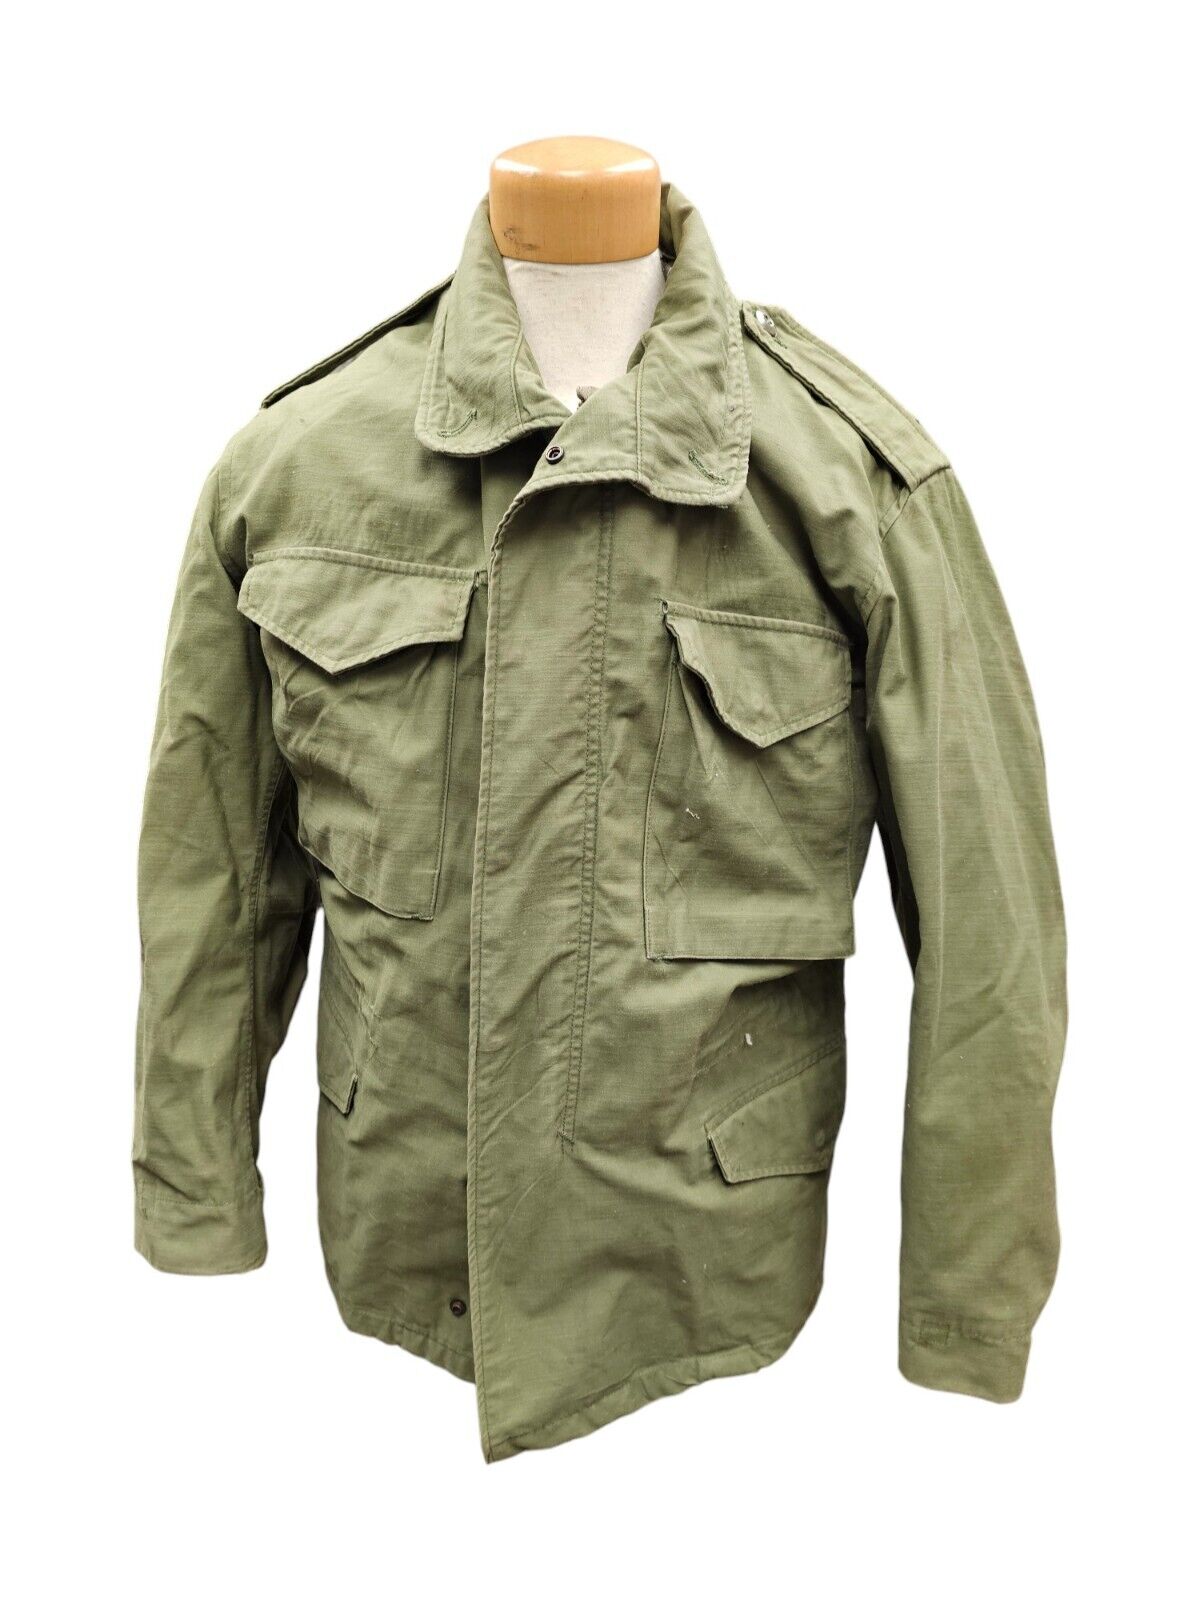 Vintage U.S. Armed Forces M65 Field Jacket - Medium Regular